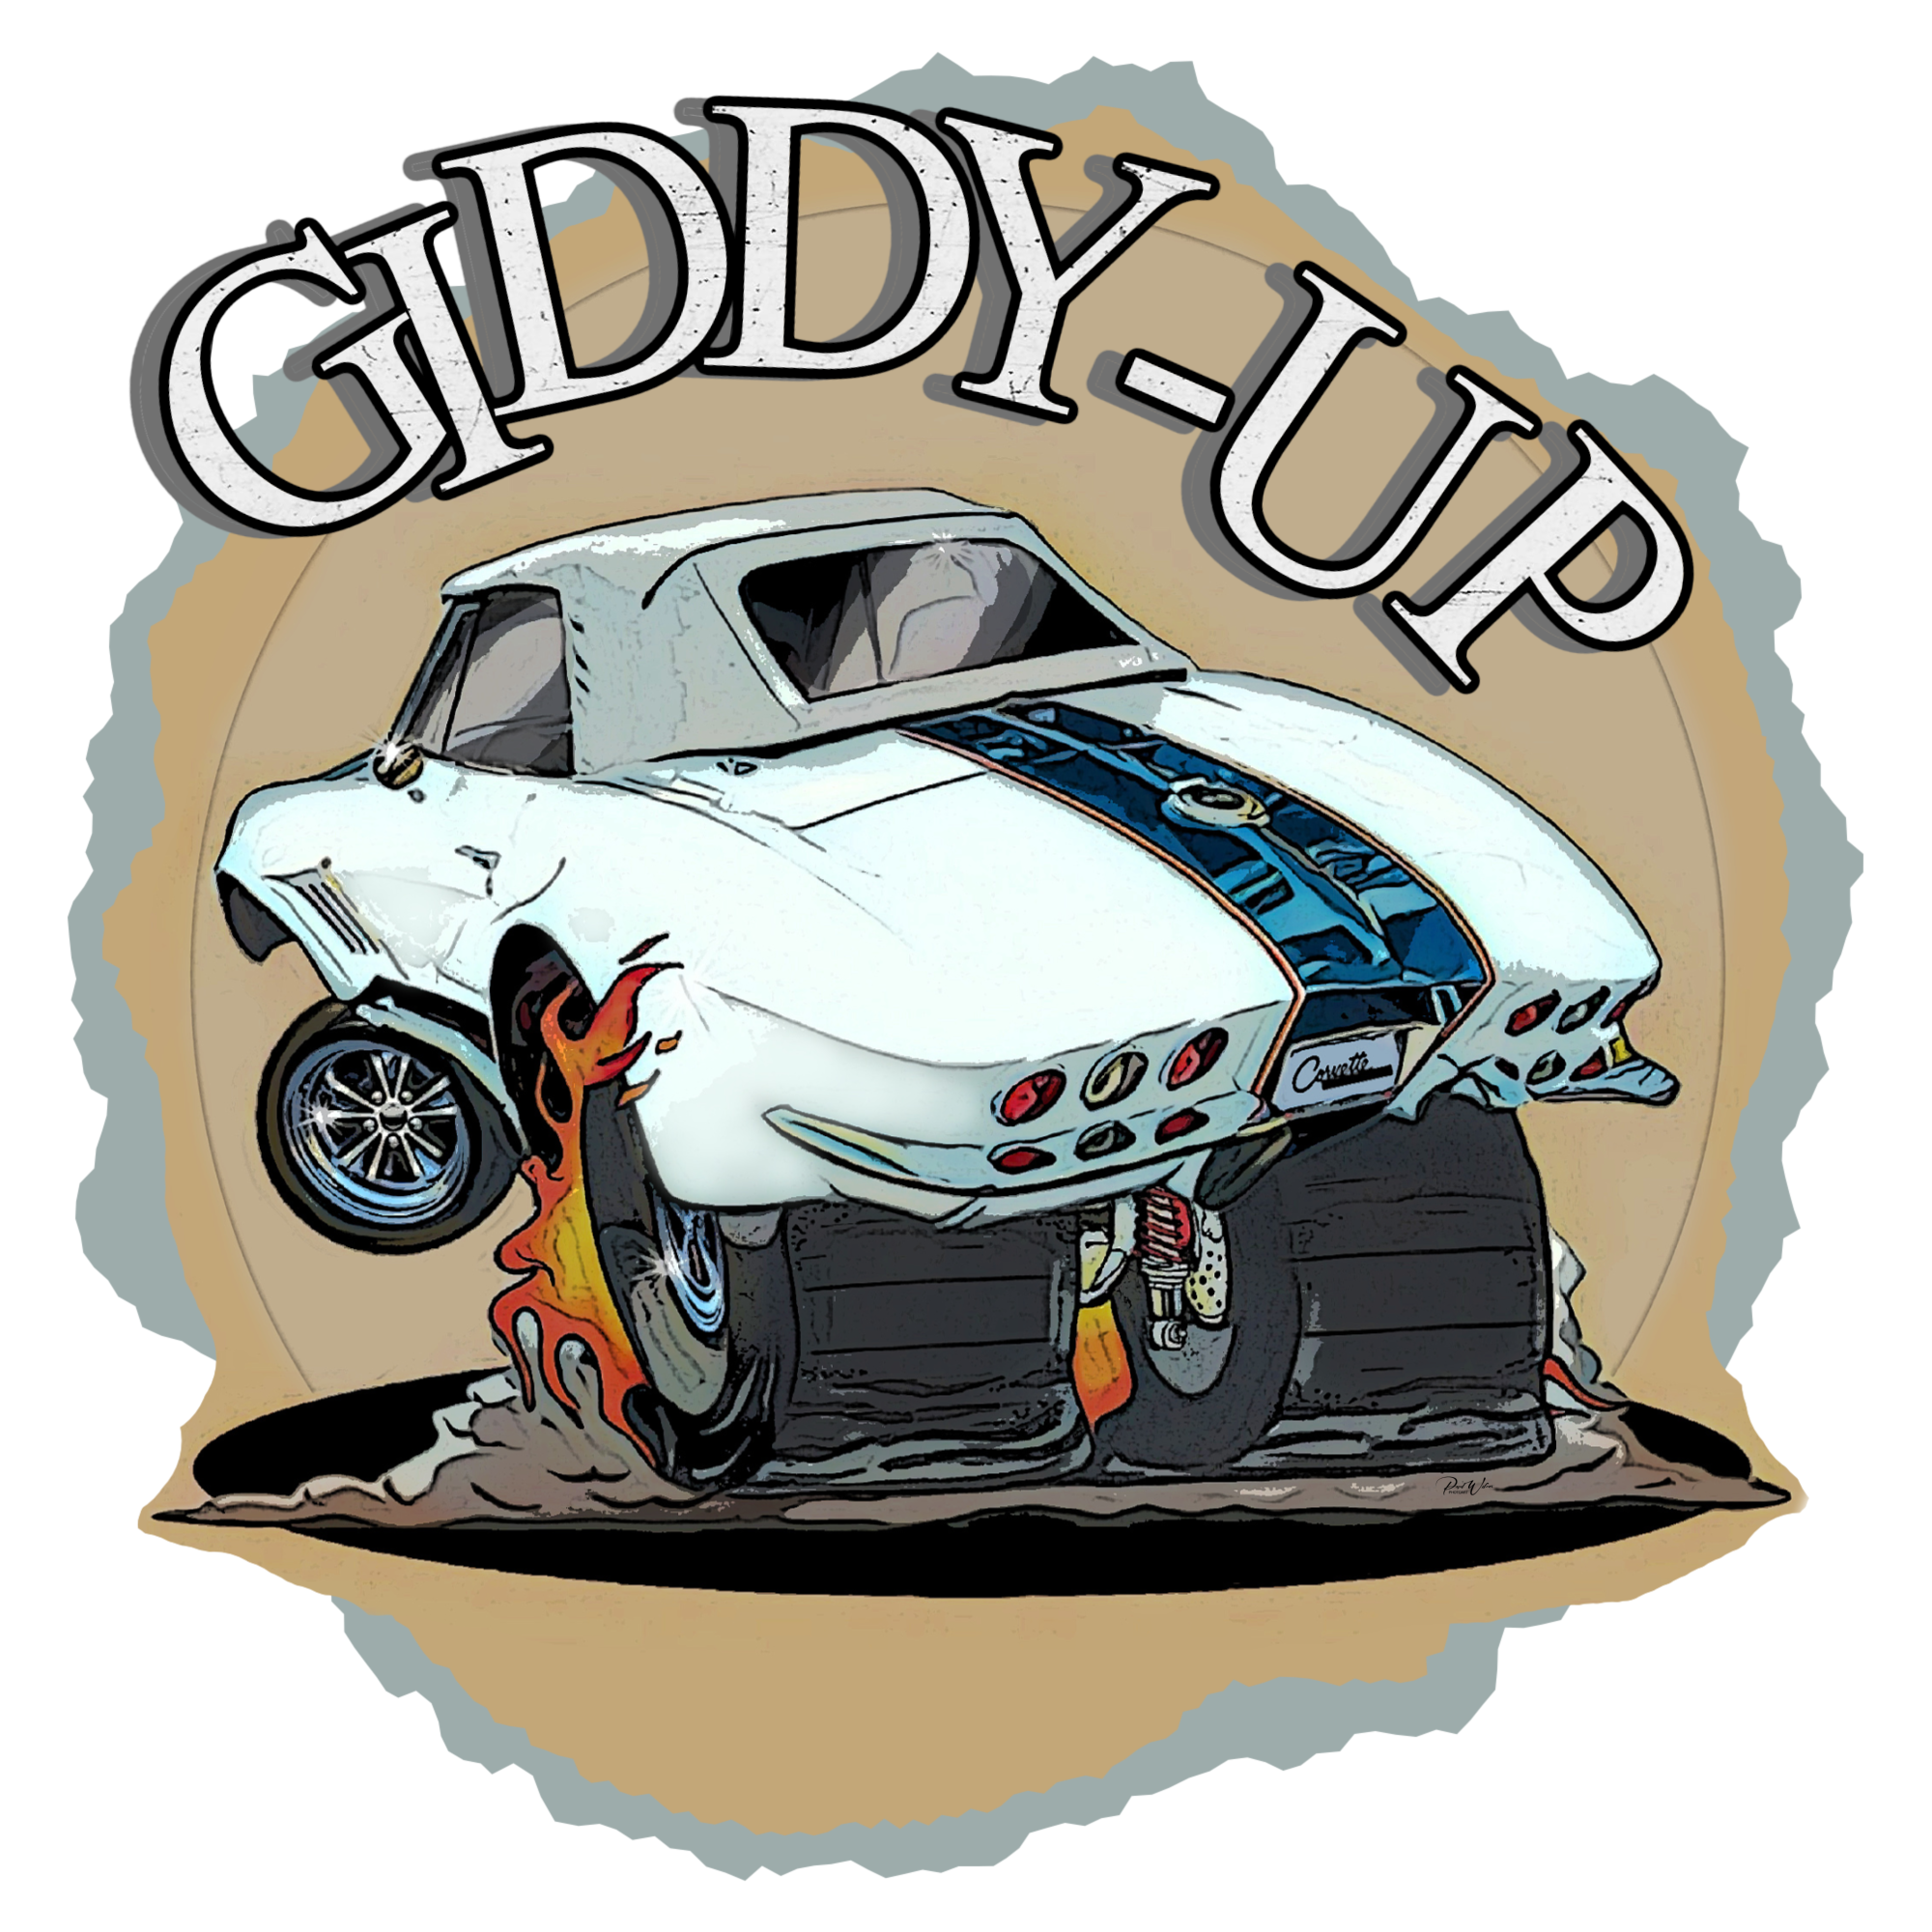 1965 Corvette Grand Sport Cartoon Style - Image